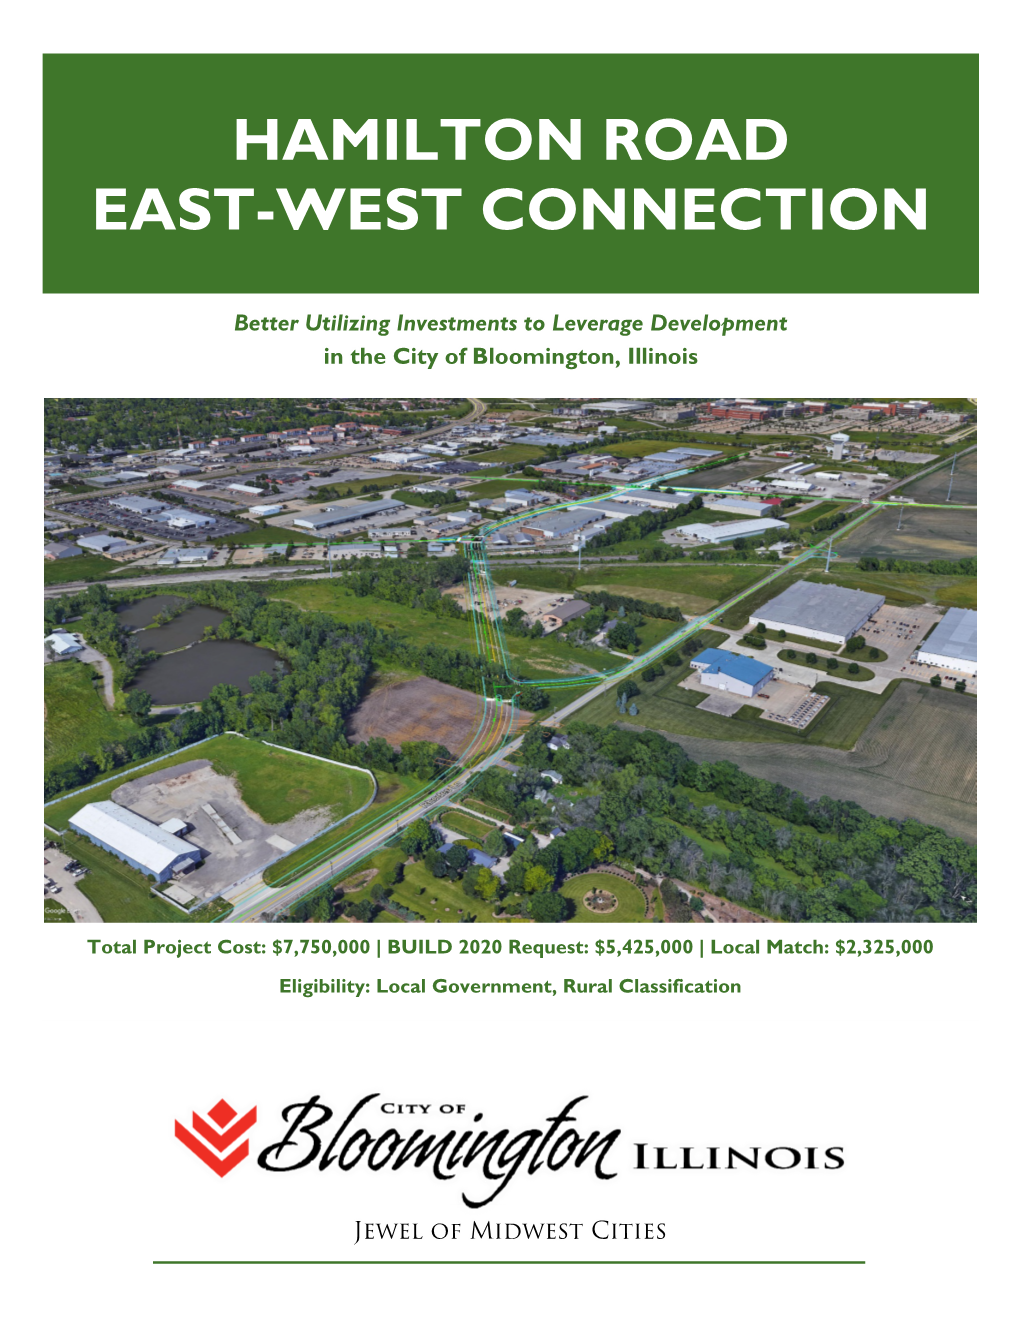 Hamilton Road East-West Connection